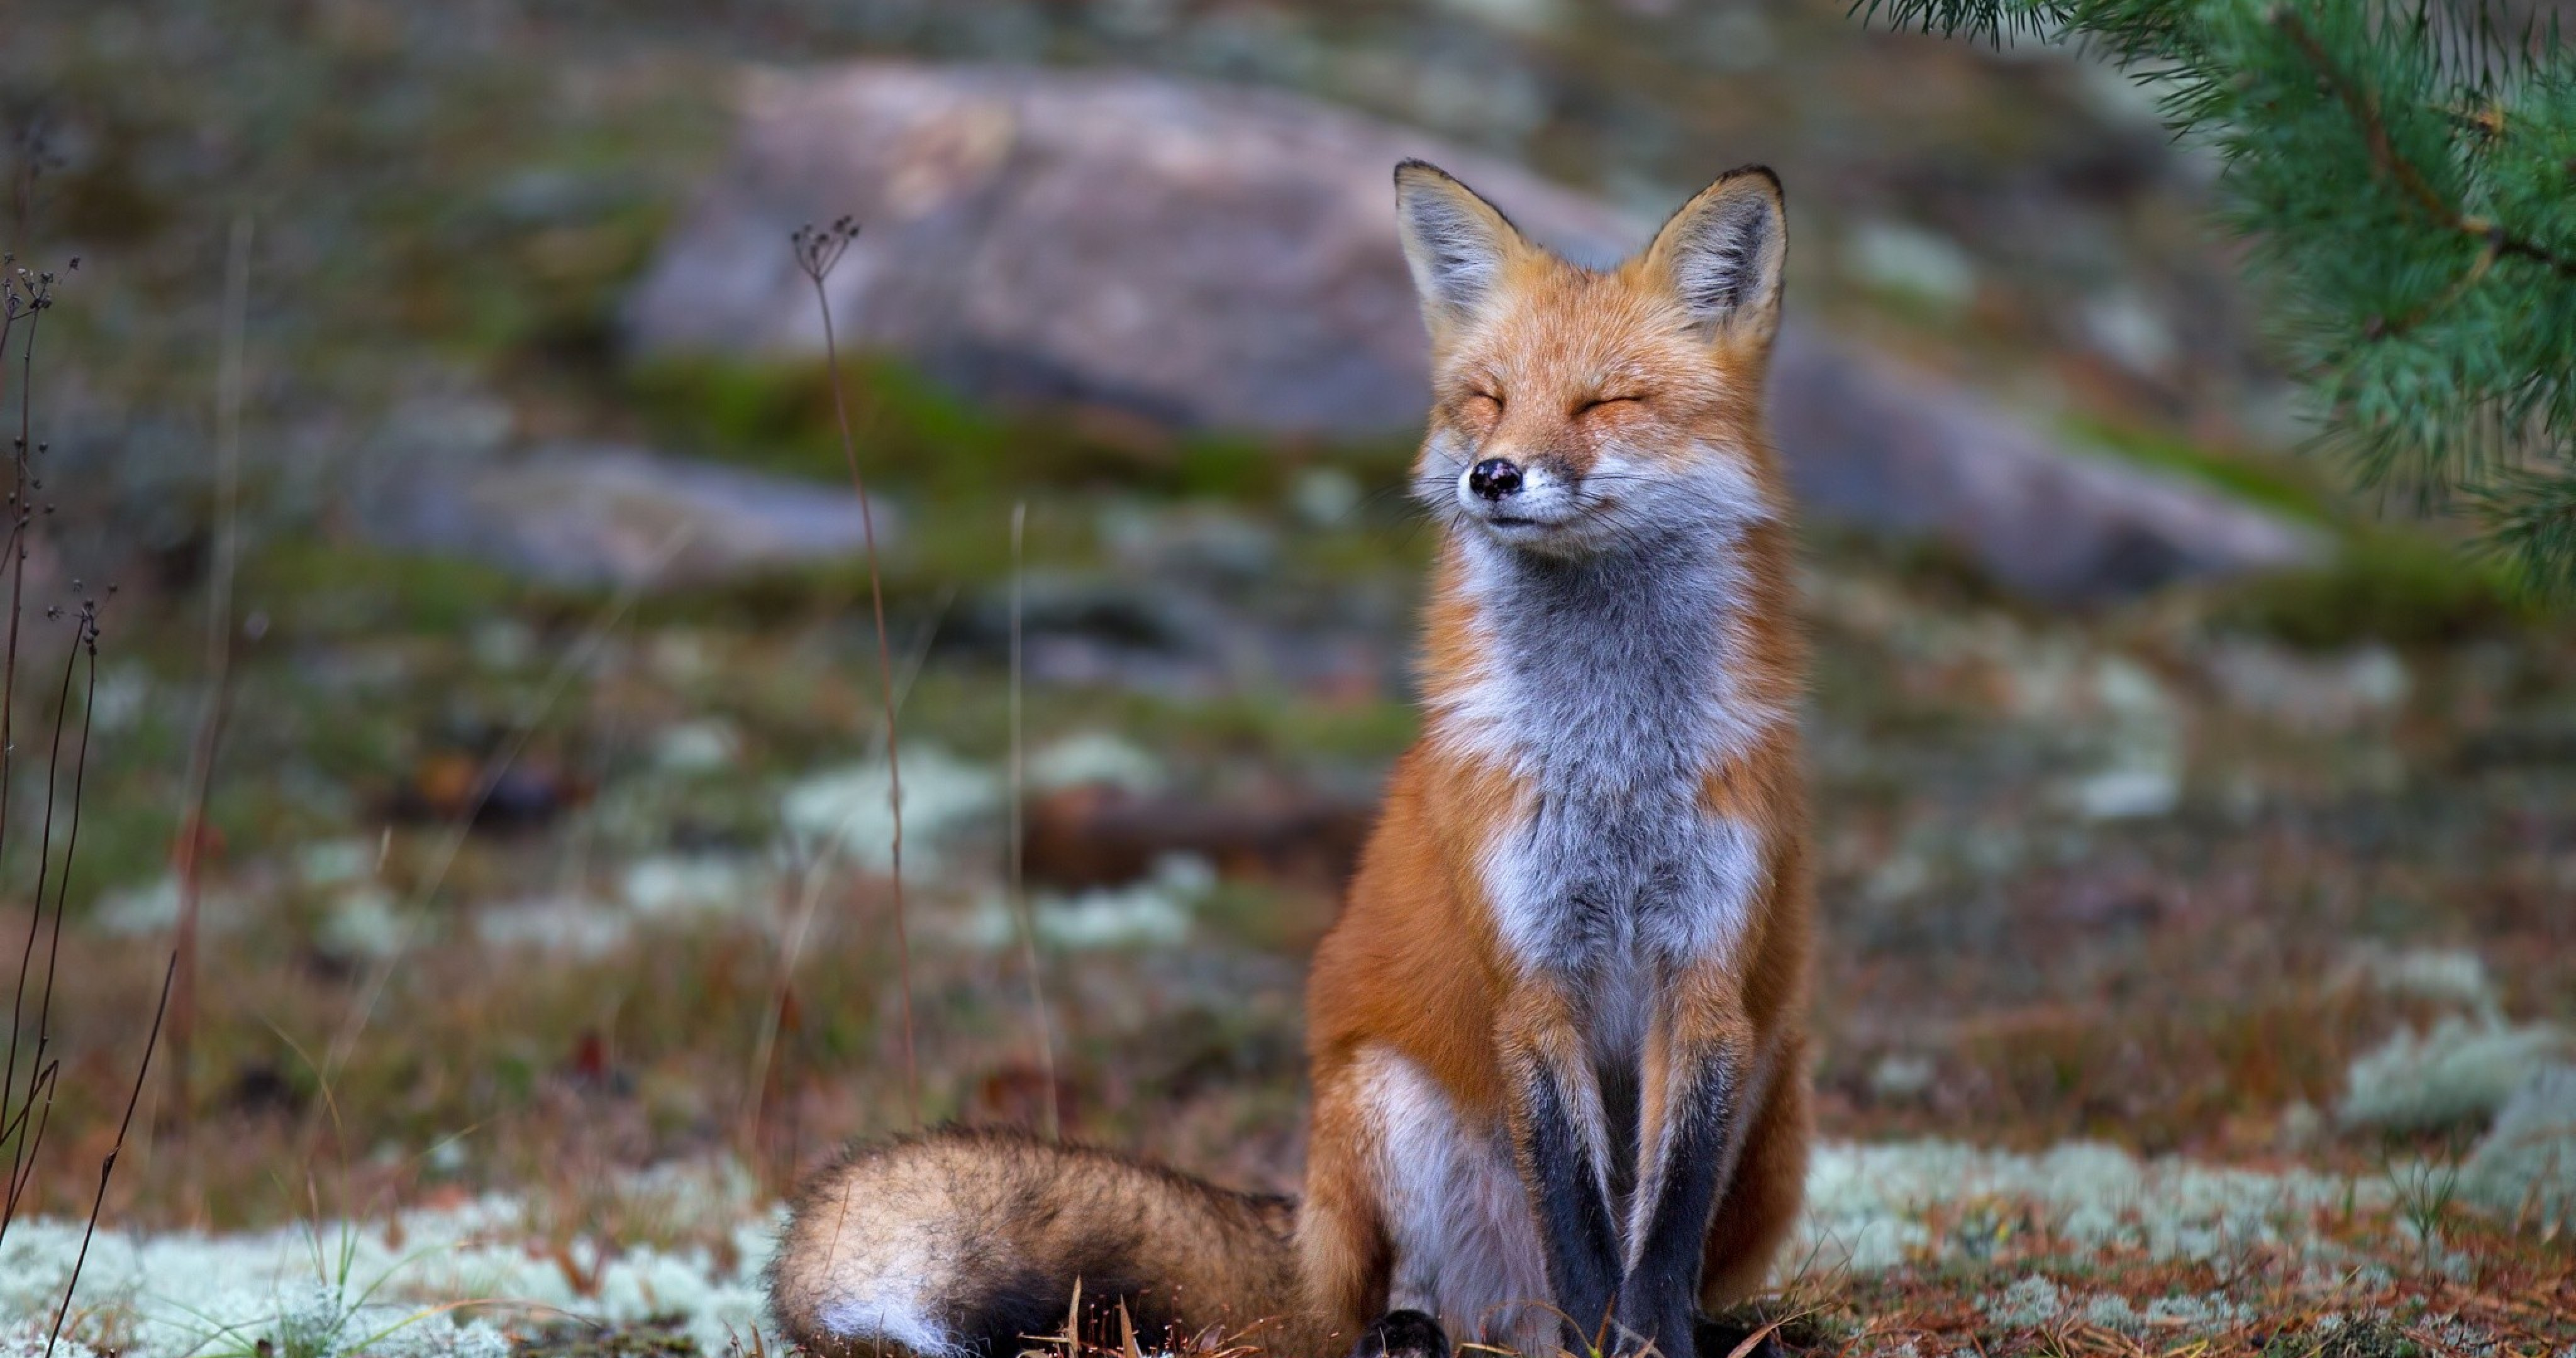 Desktop Wallpaper Cute Red Fox Animal  Hd Image Picture Background 9zlt  T